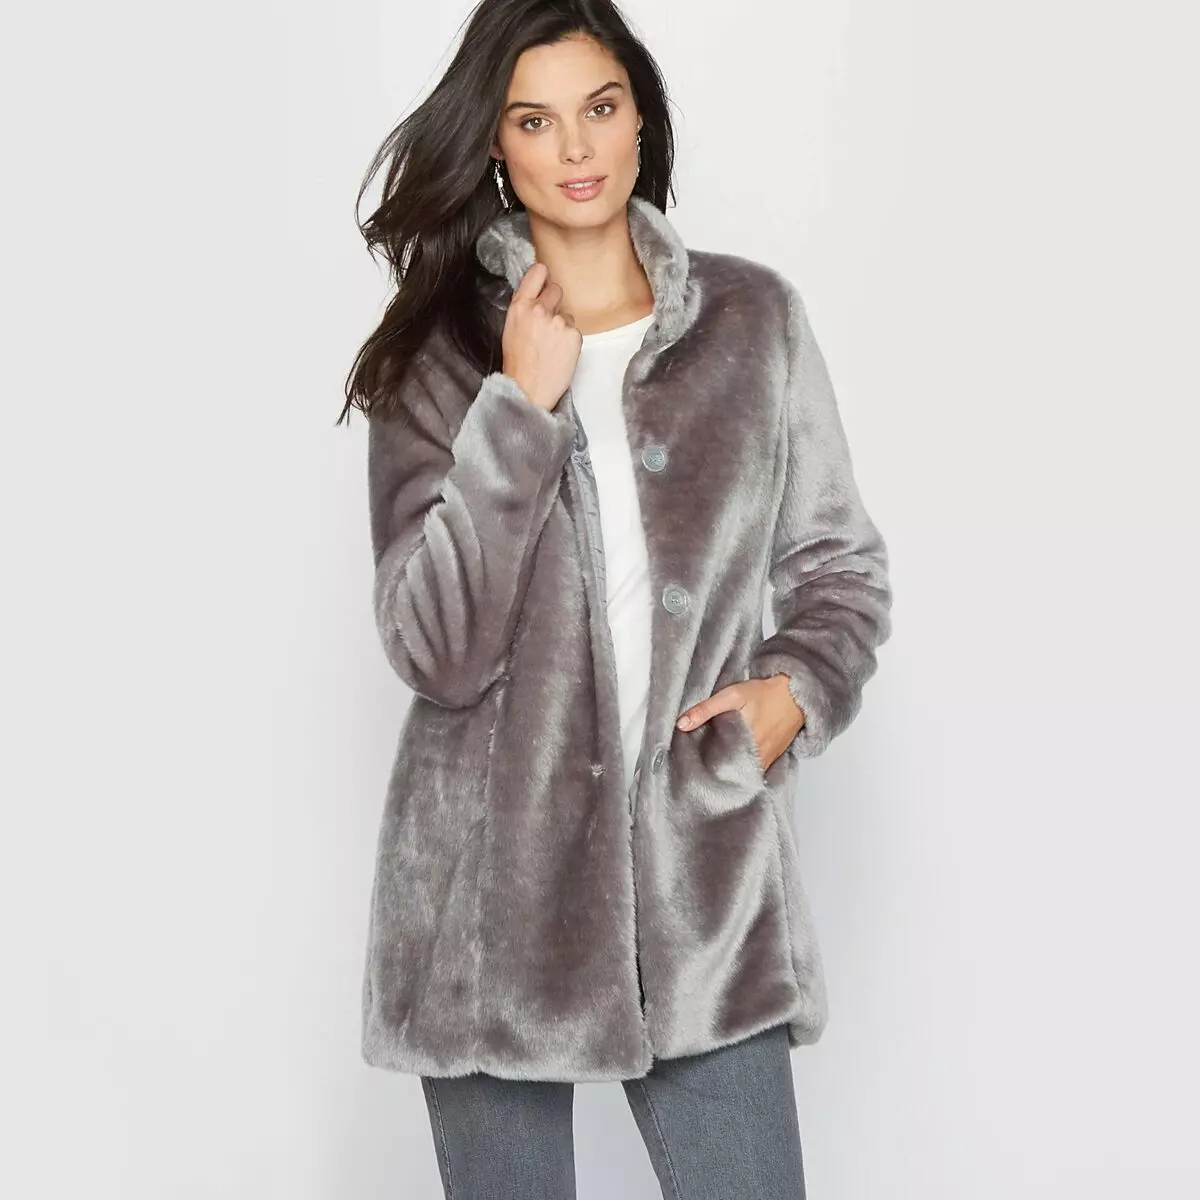 Пальто зі штучного хутра (78 фото): з каракулю, з капюшоном, плюшеве, жіночі моделі пальто 621_46